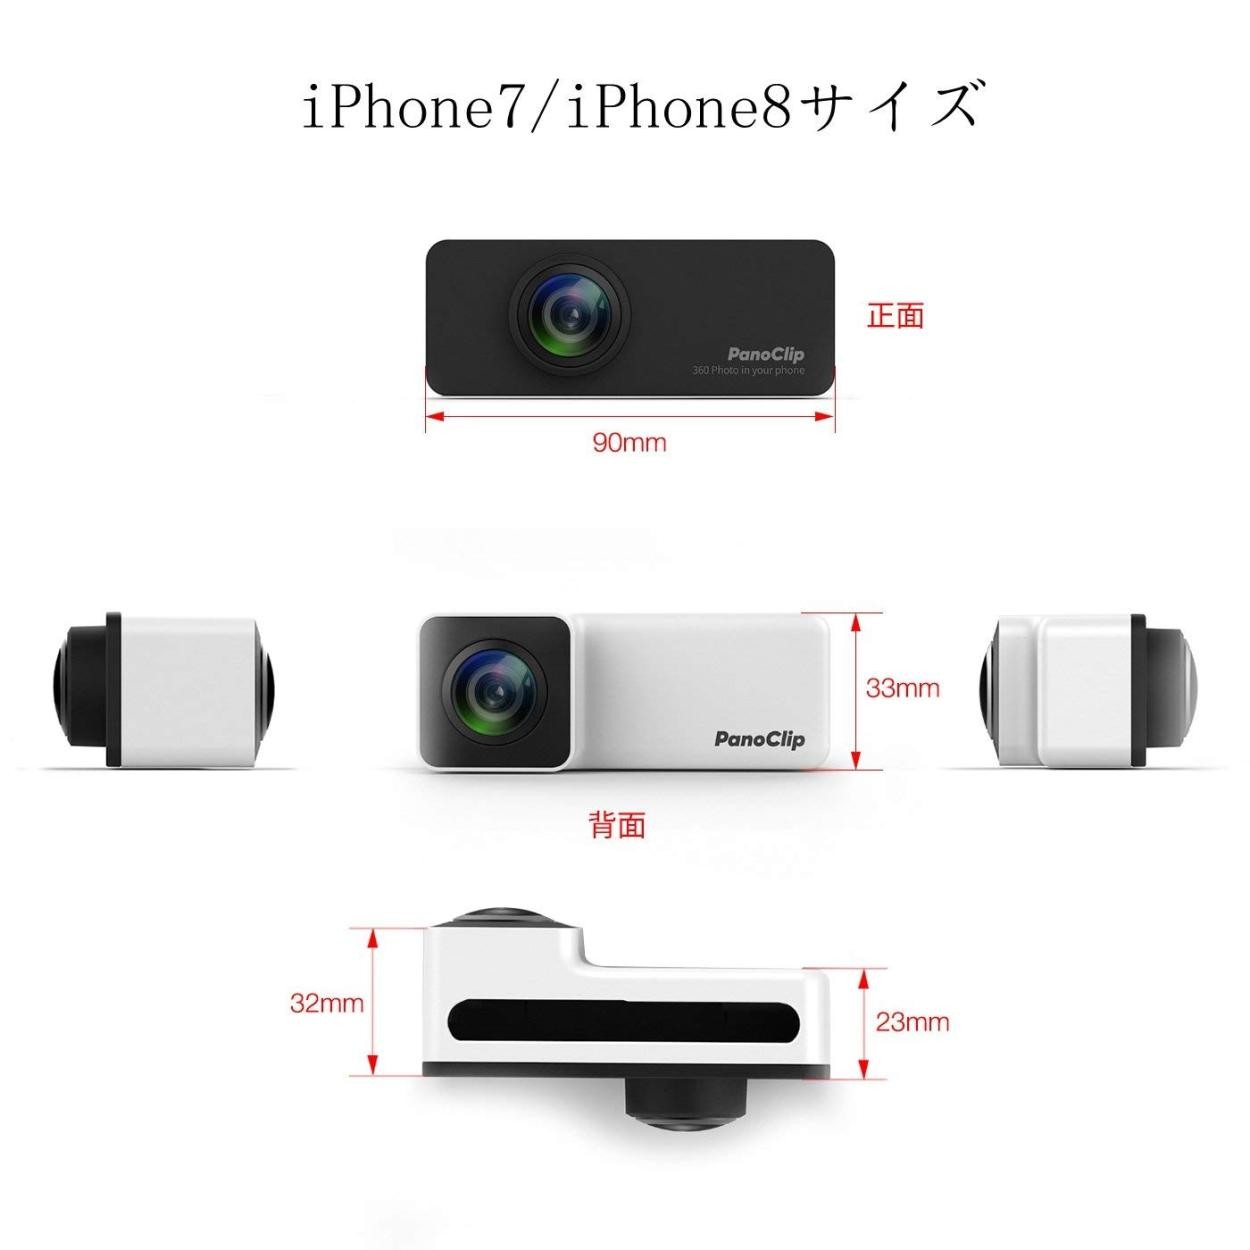 iPhoneX PanoClip 360° iPhone7 Plus/8 Plus iPhone X レンズ パノラマカメラ iPhone  スマホレンズ 全方位 広角 魚眼 ダブルレンズ